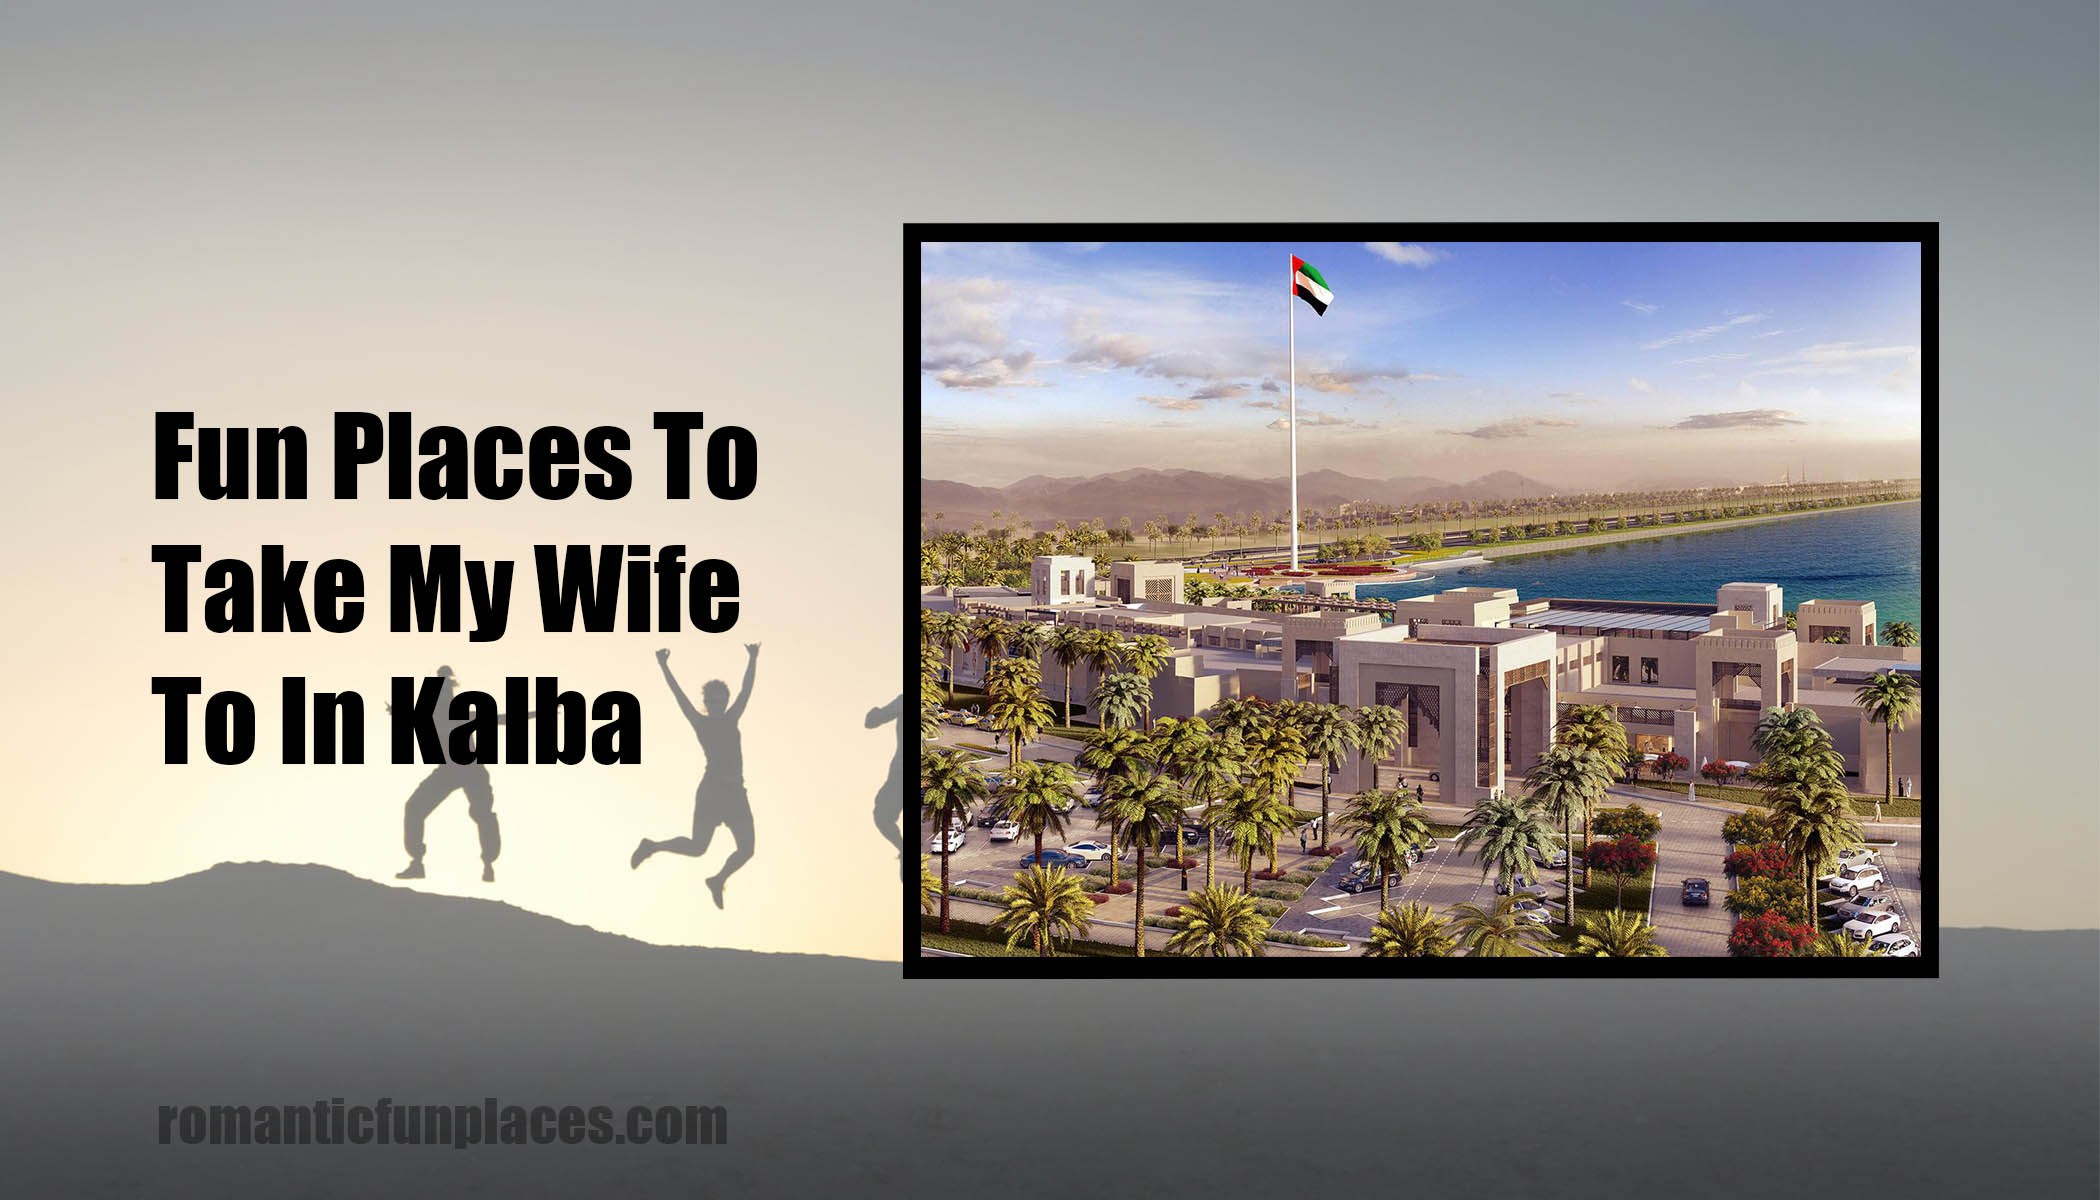 Fun Places To Take My Wife To In Kalba